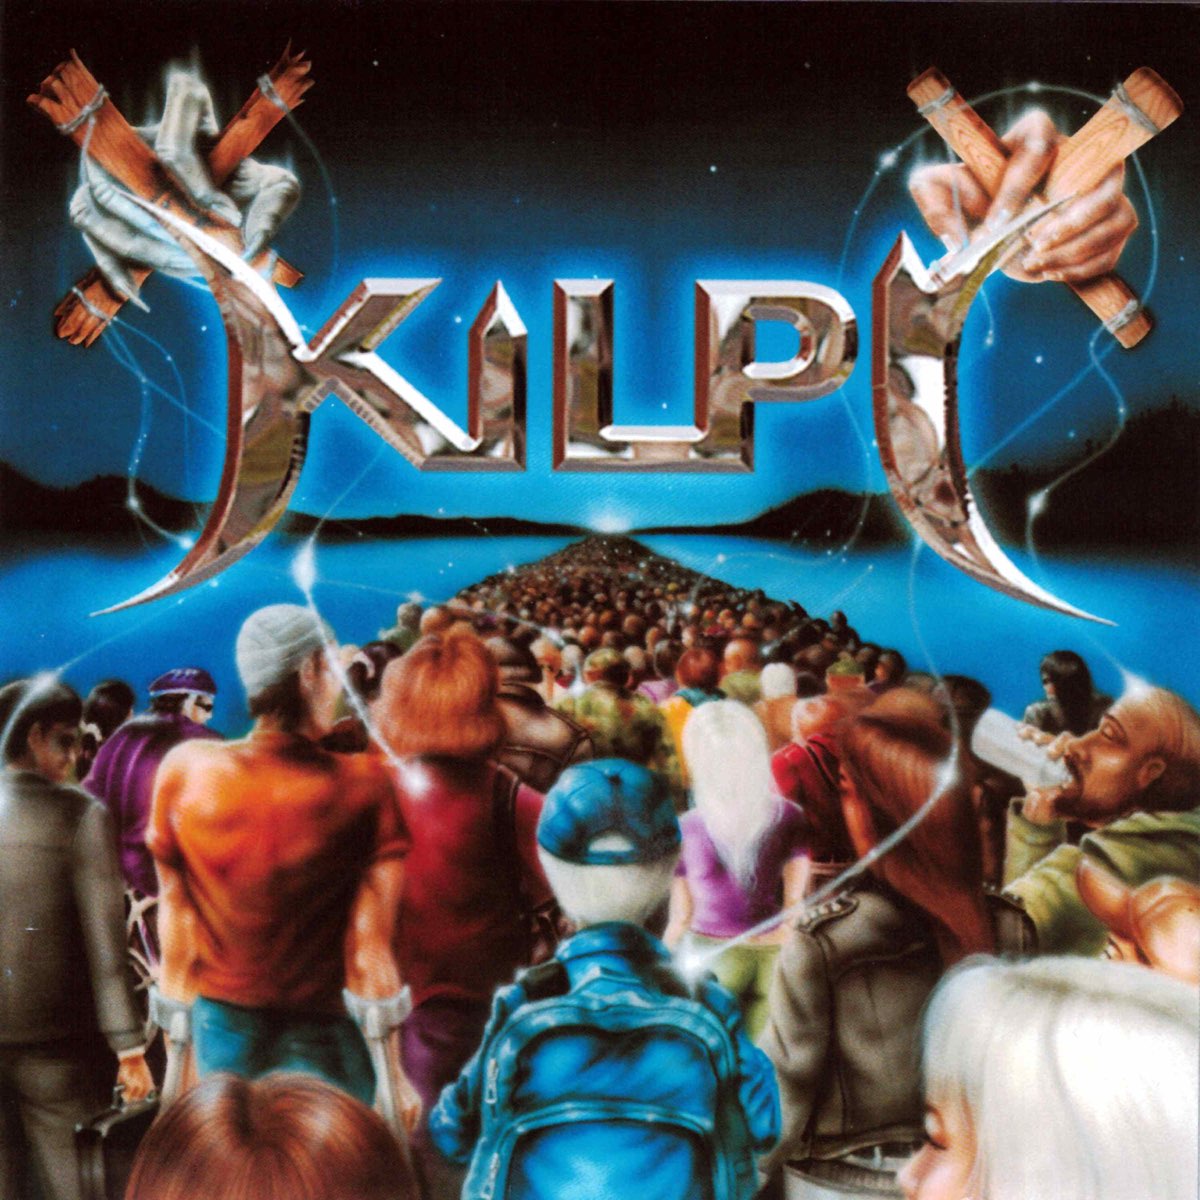 Kaaoksen Kuningas (Remastered) by Kilpi on Apple Music